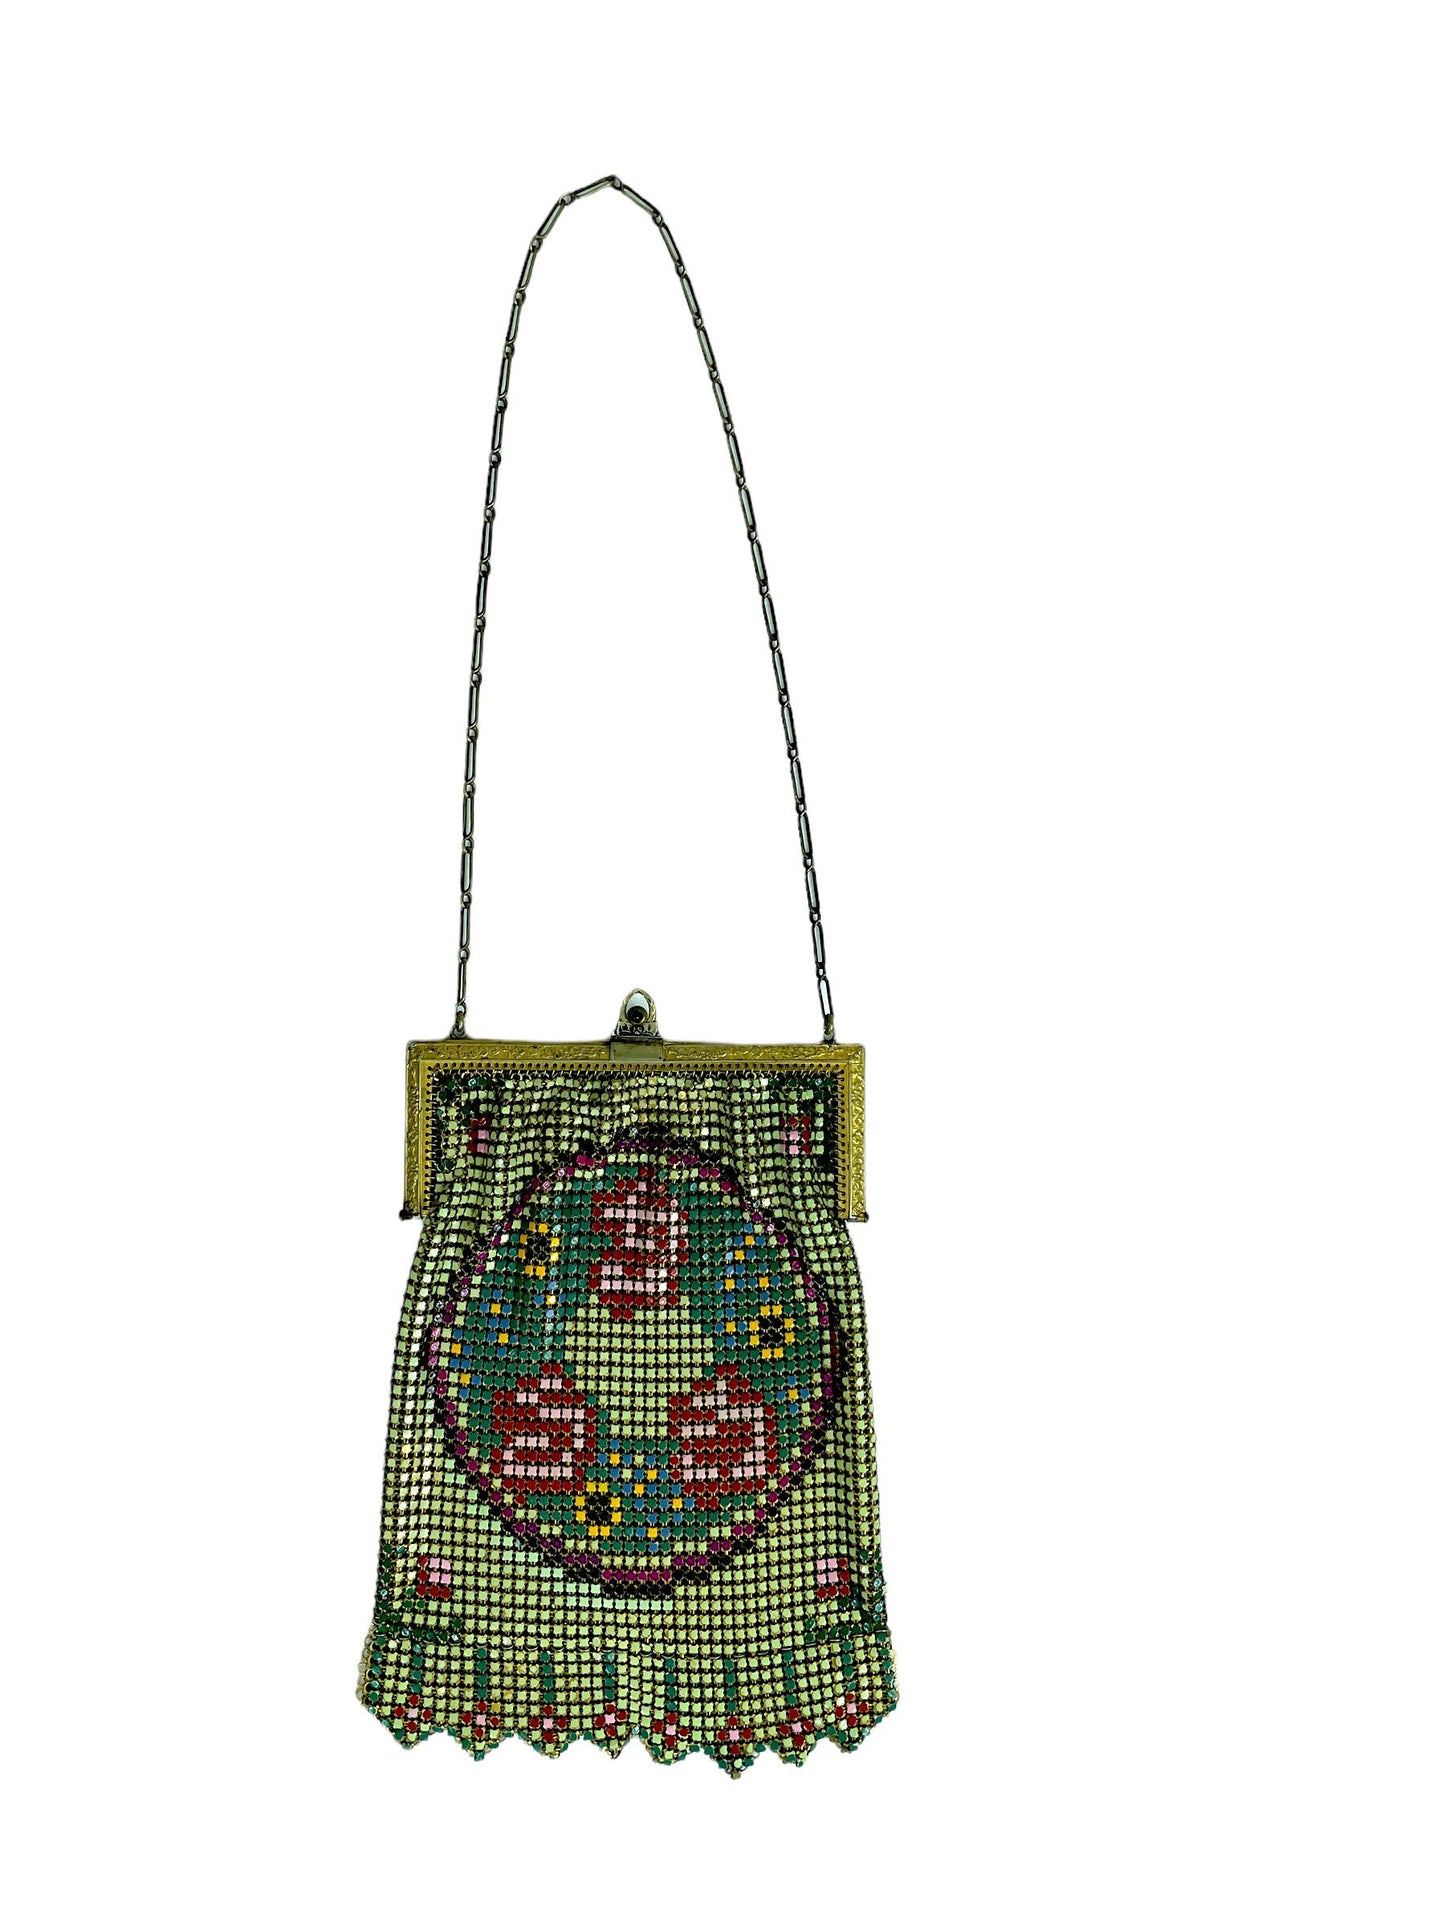 1920s enamel mesh purse with chain handle Flapper evening bag